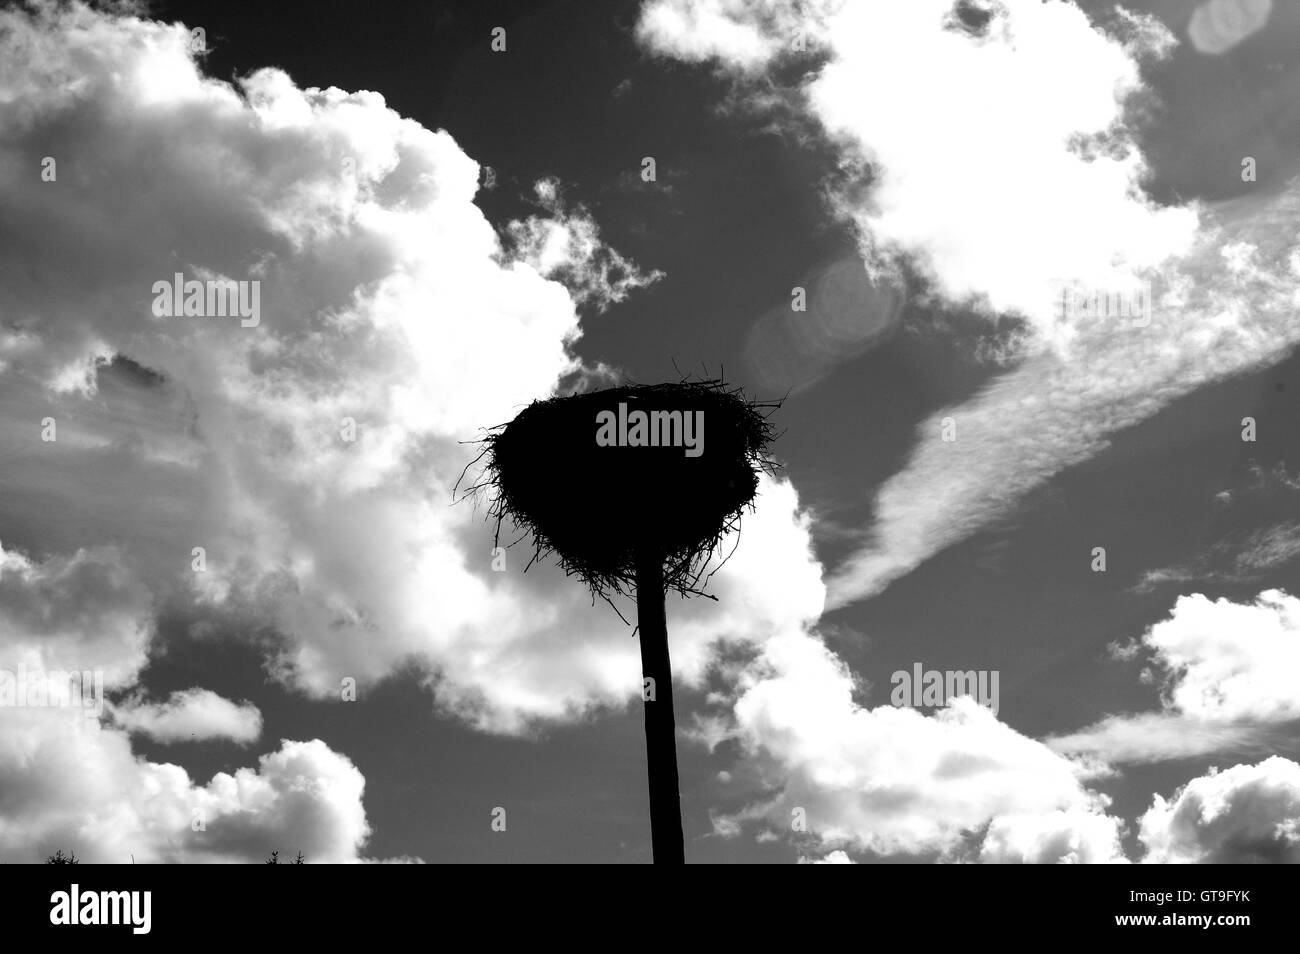 Storch, Storchennest, Nest, Storch nest Turm, Storch Socket, Silhouette, Storch nisten silhouette Stockfoto